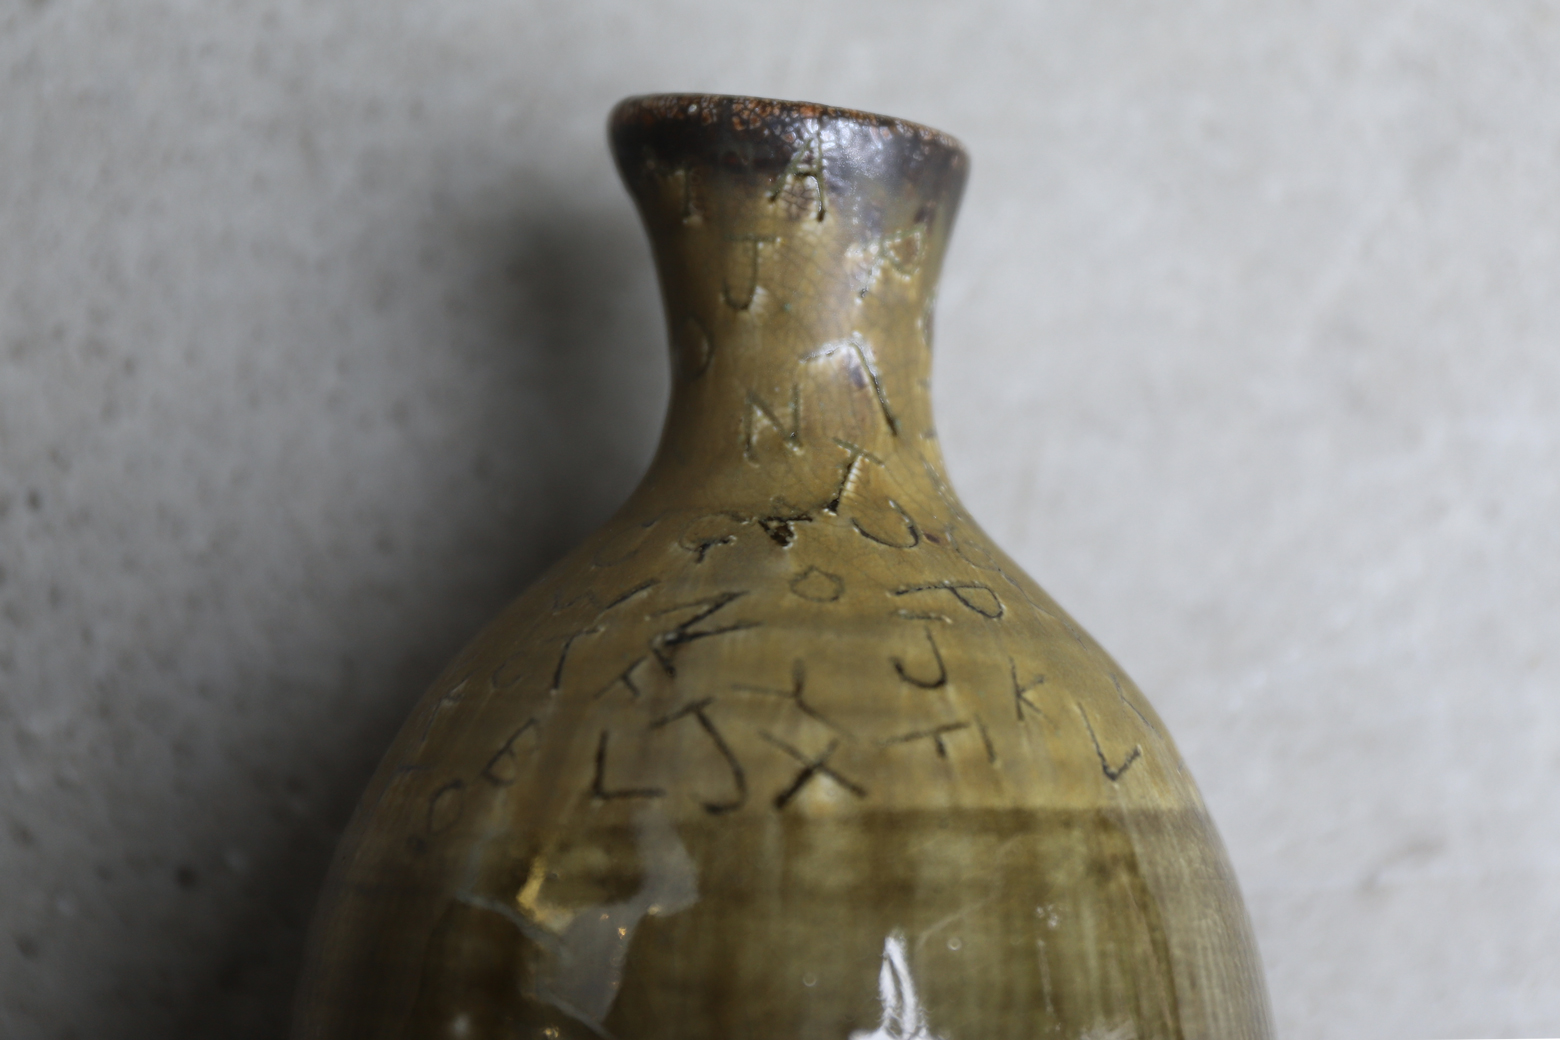 Japan Craft Pottery Flower Vase/一輪挿し 花瓶 陶芸 焼物 ジャパンクラフト インテリア